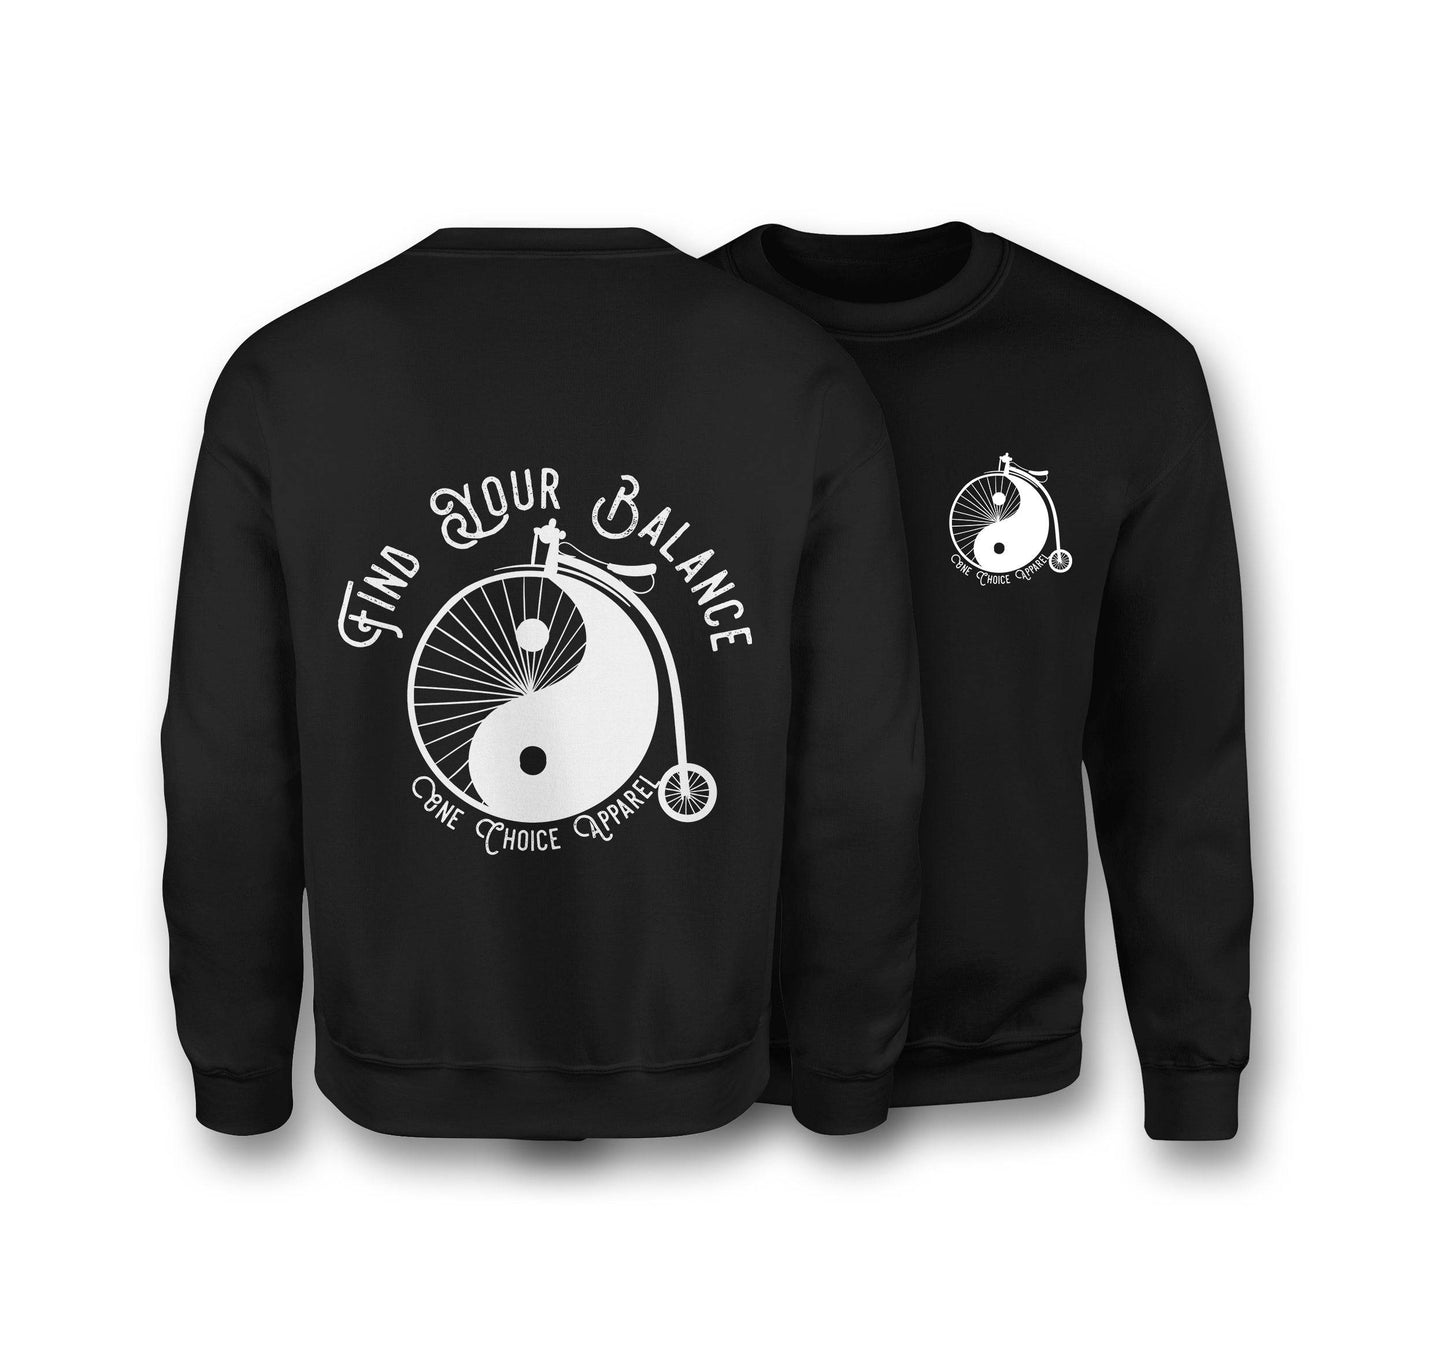 Find Your Balance Sweatshirt - Organic Cotton Sweatshirt - One Choice Apparel